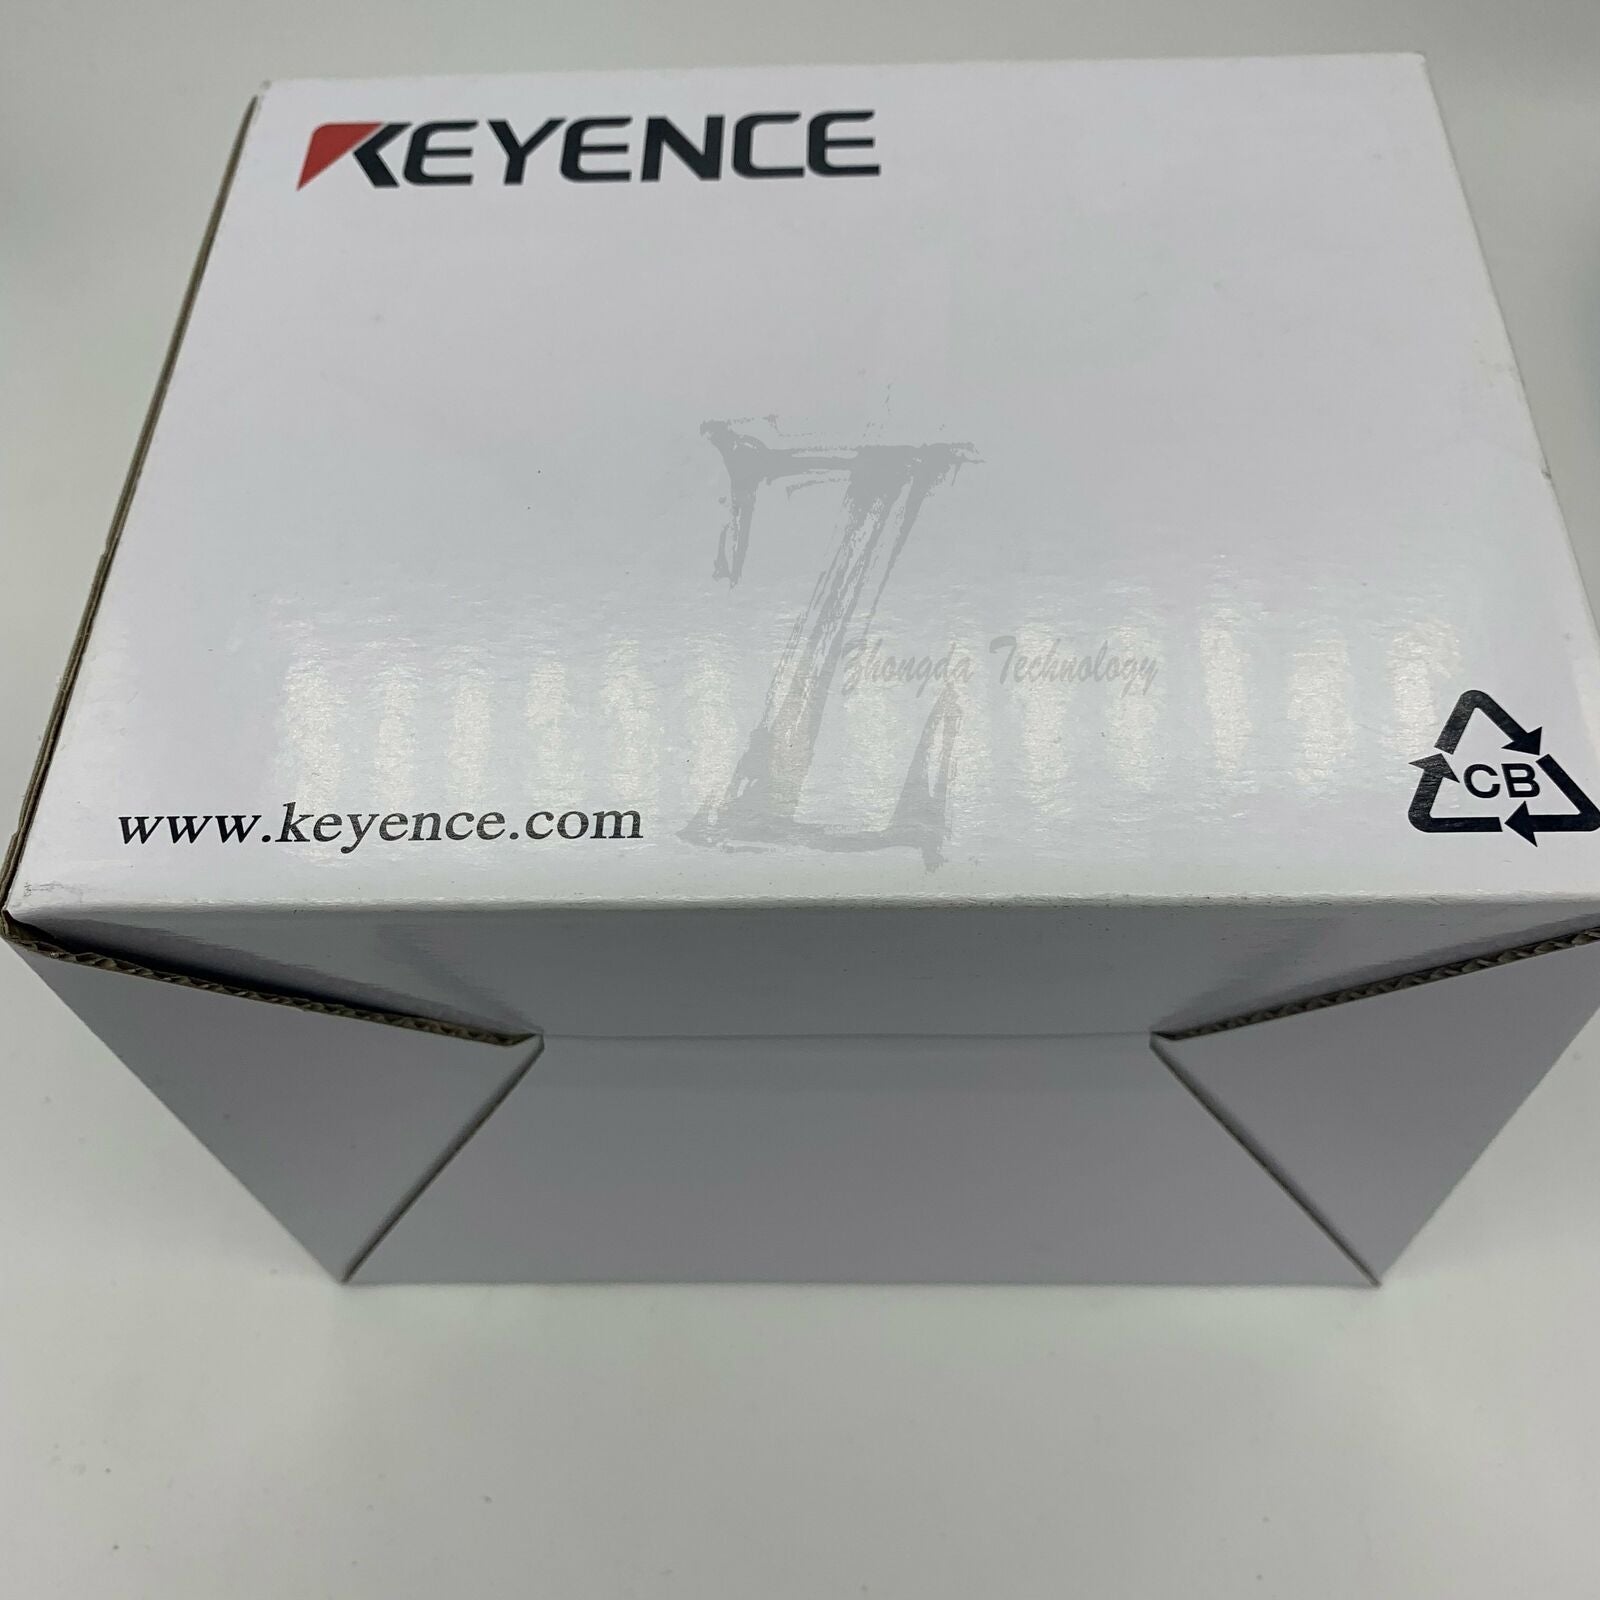 1pcs New Keyence Proximity Sensor free shipping KOEED 201-500, 90%, import_2020_10_10_031751, Keyence, Other, validate-product-description